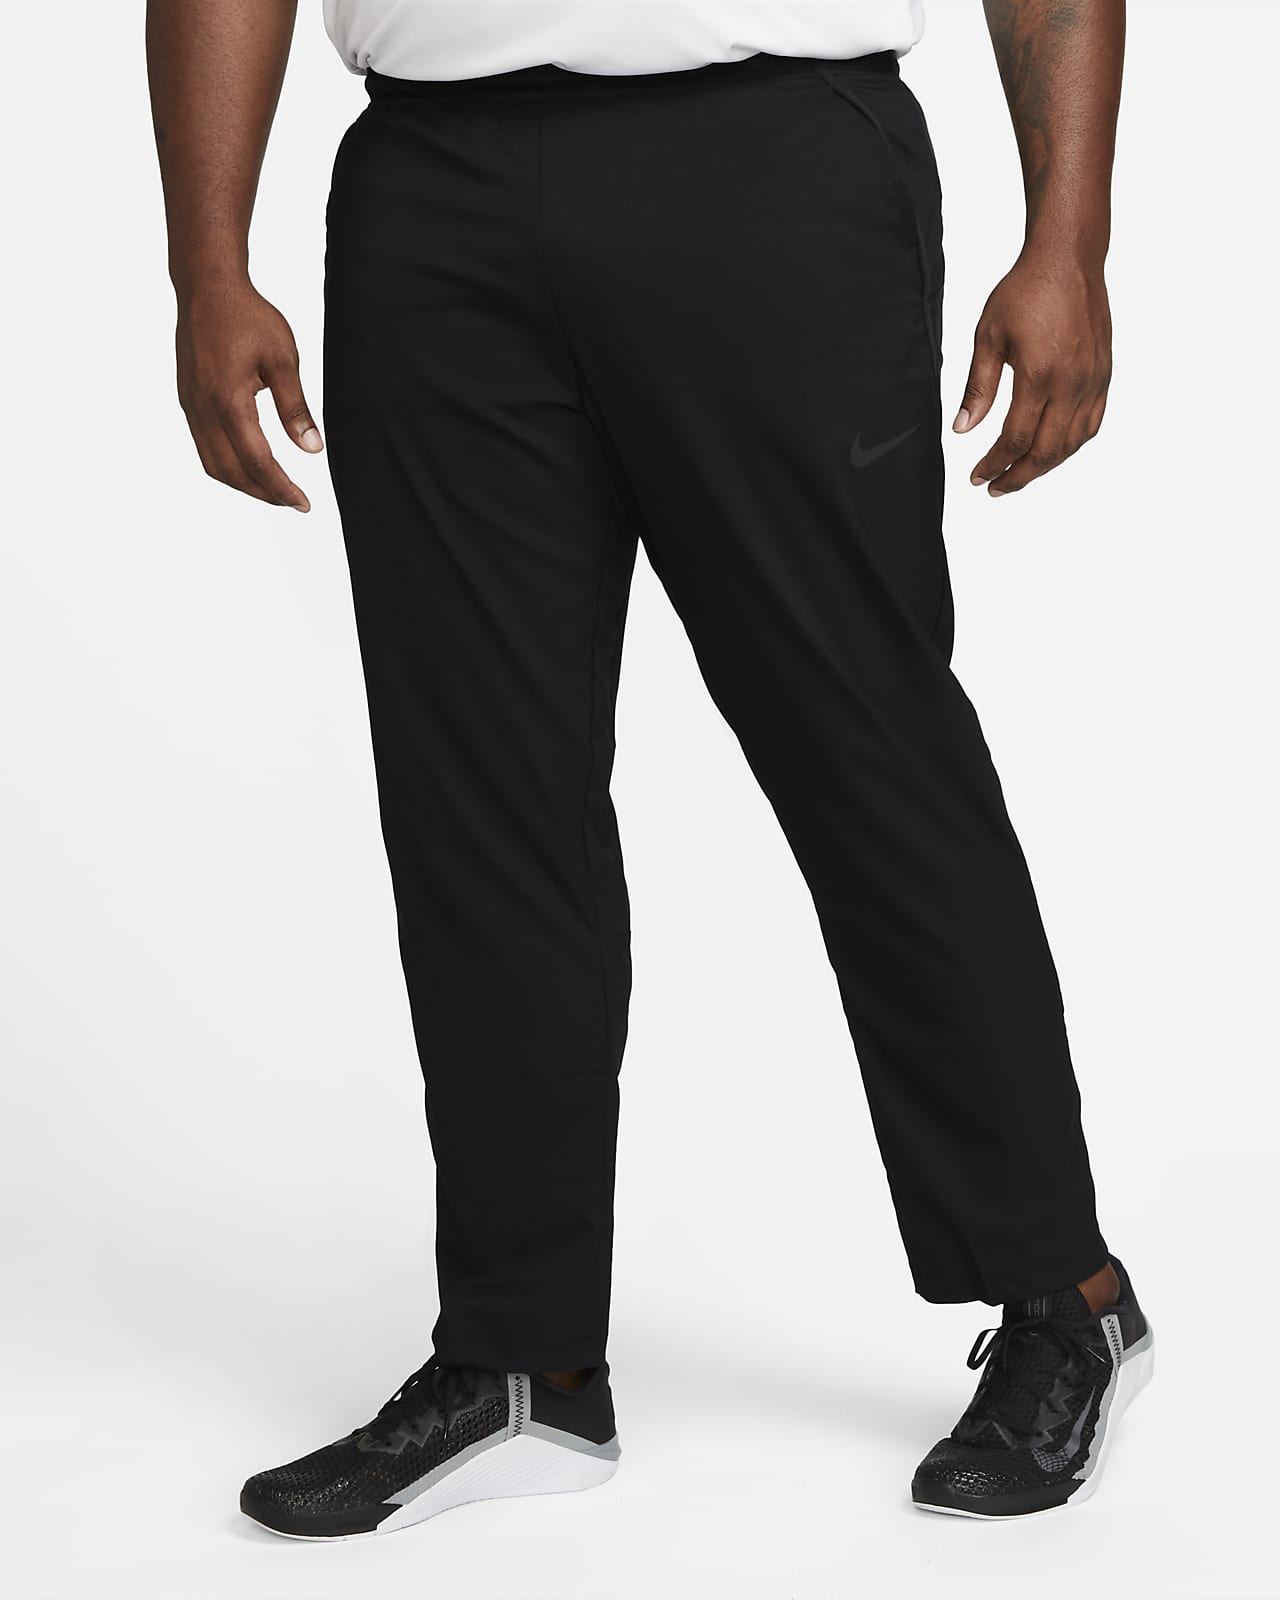 Nike Dri-FIT Men's Woven Training Trousers. Nike LU